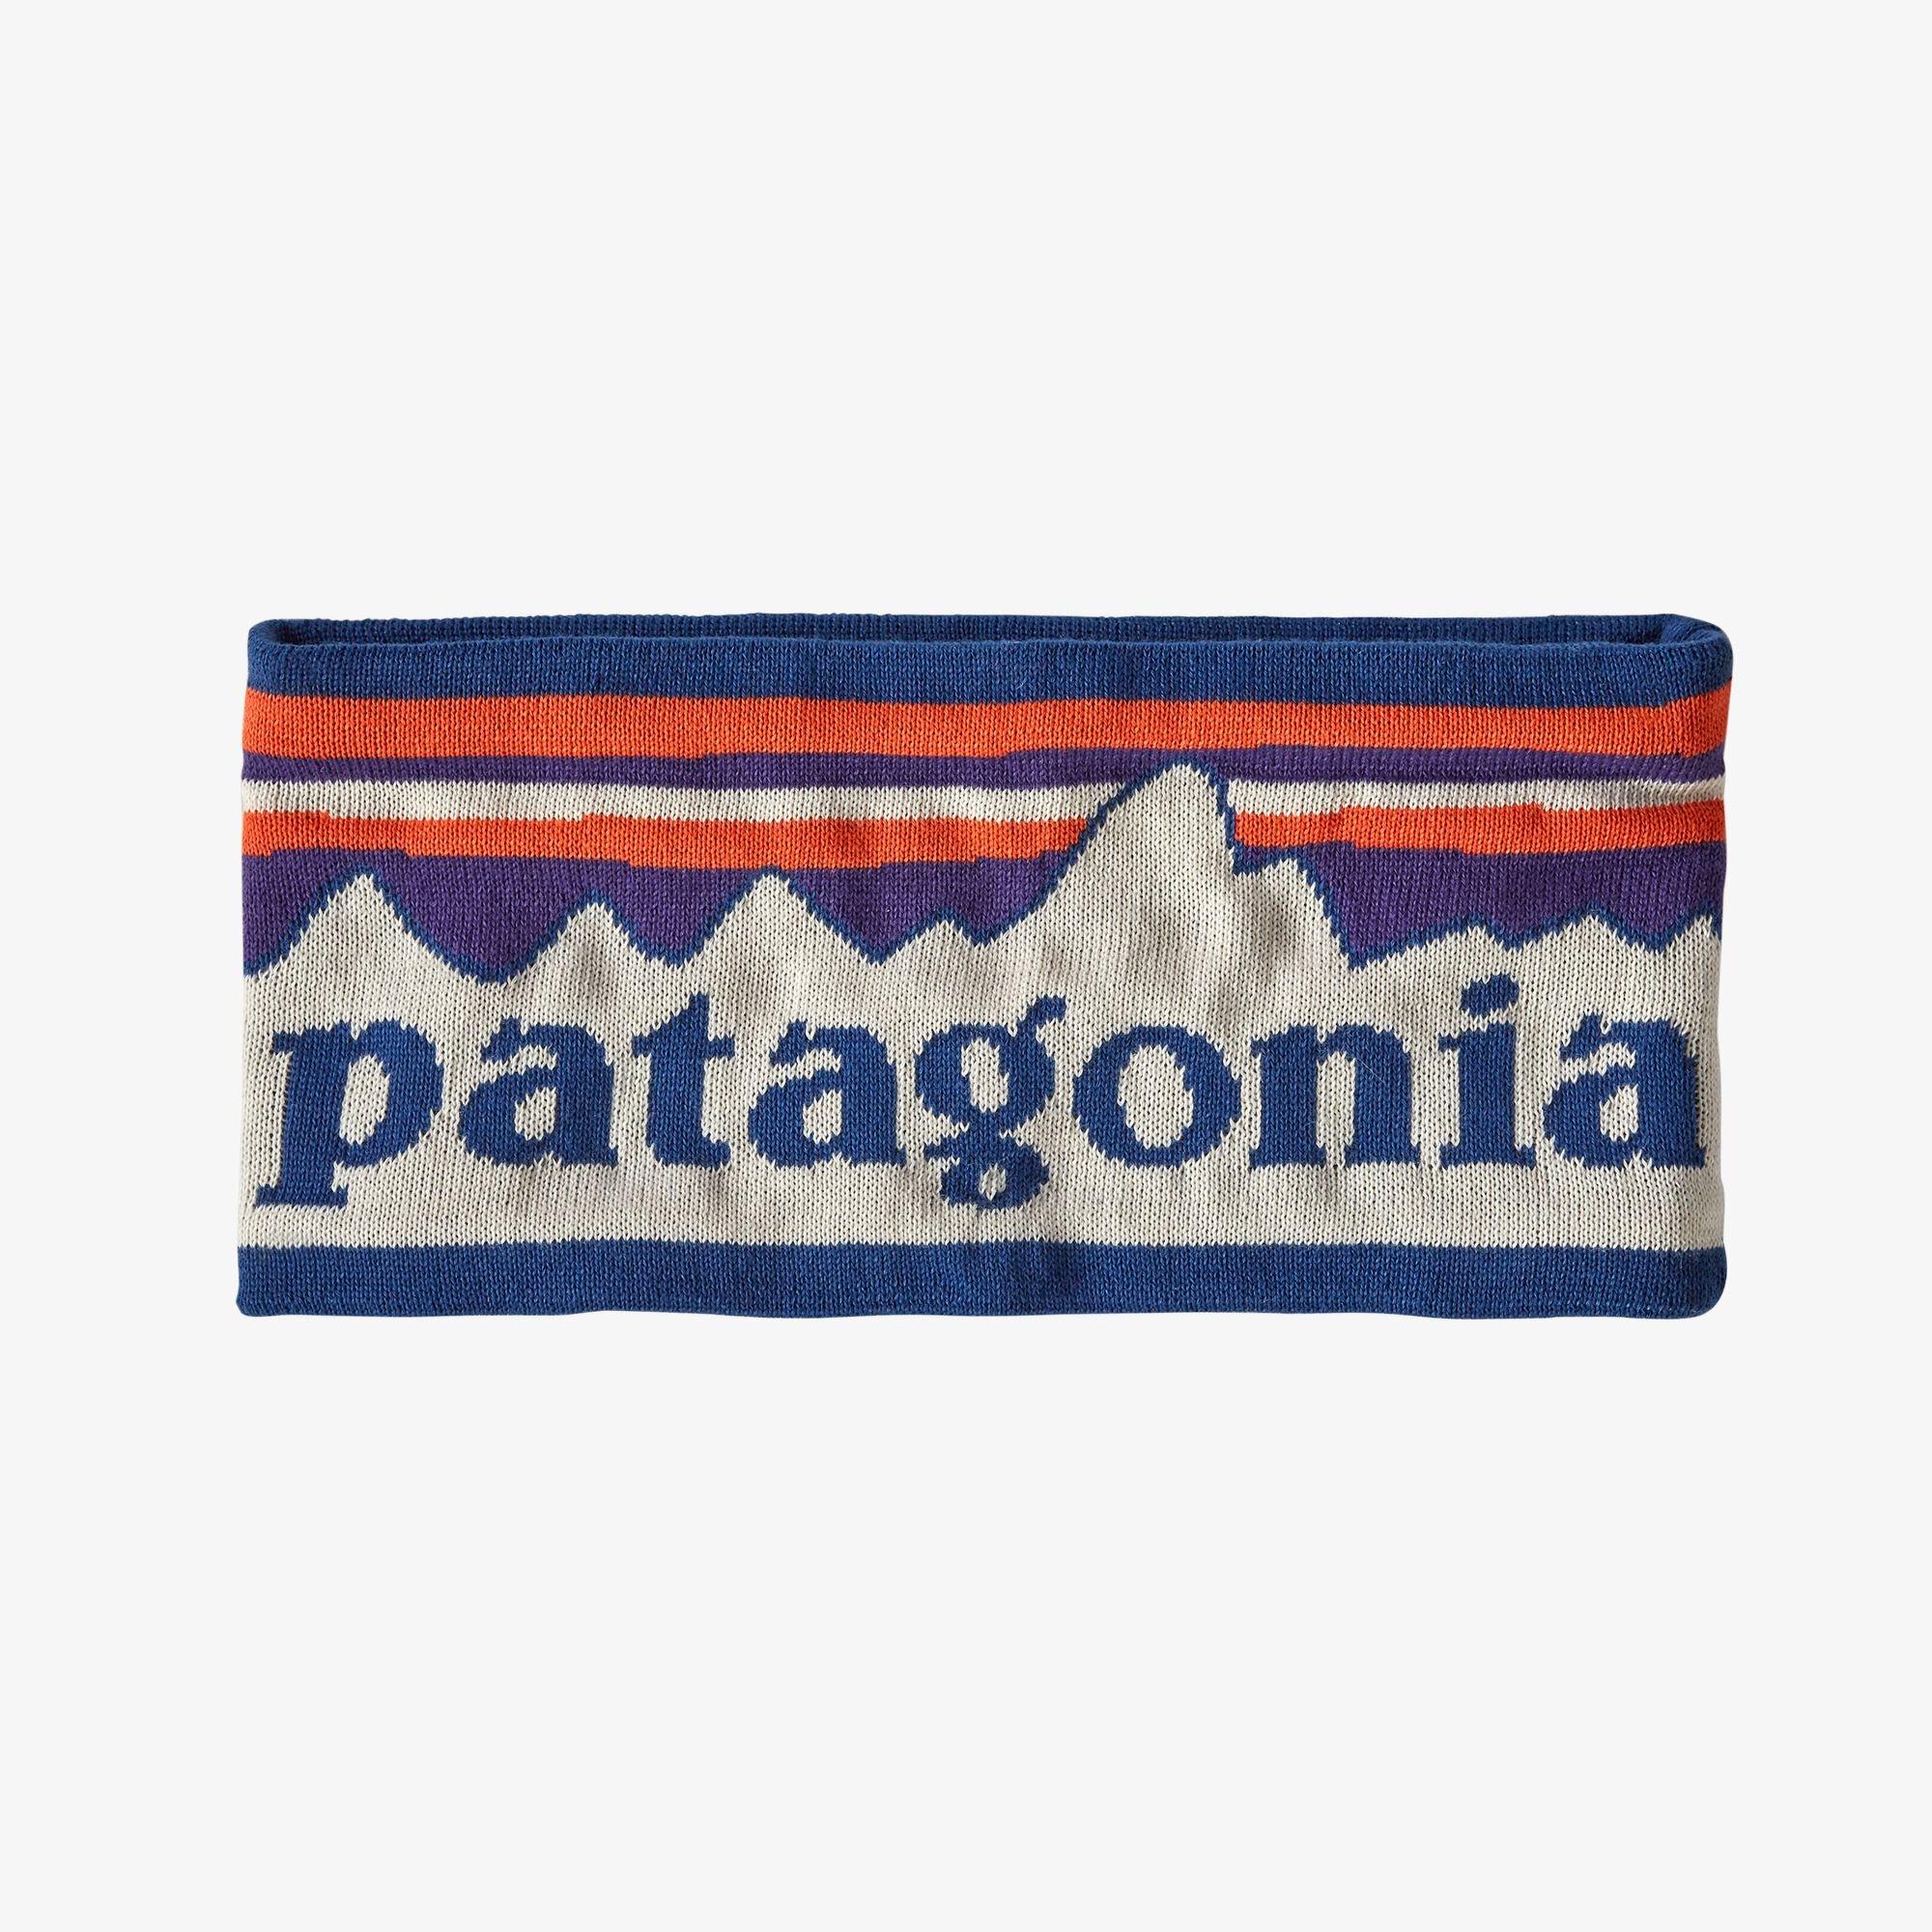 Patagonia Powder Town Headband - Recycled Nylon Fitz Roy Sunrise Knit: Birch White